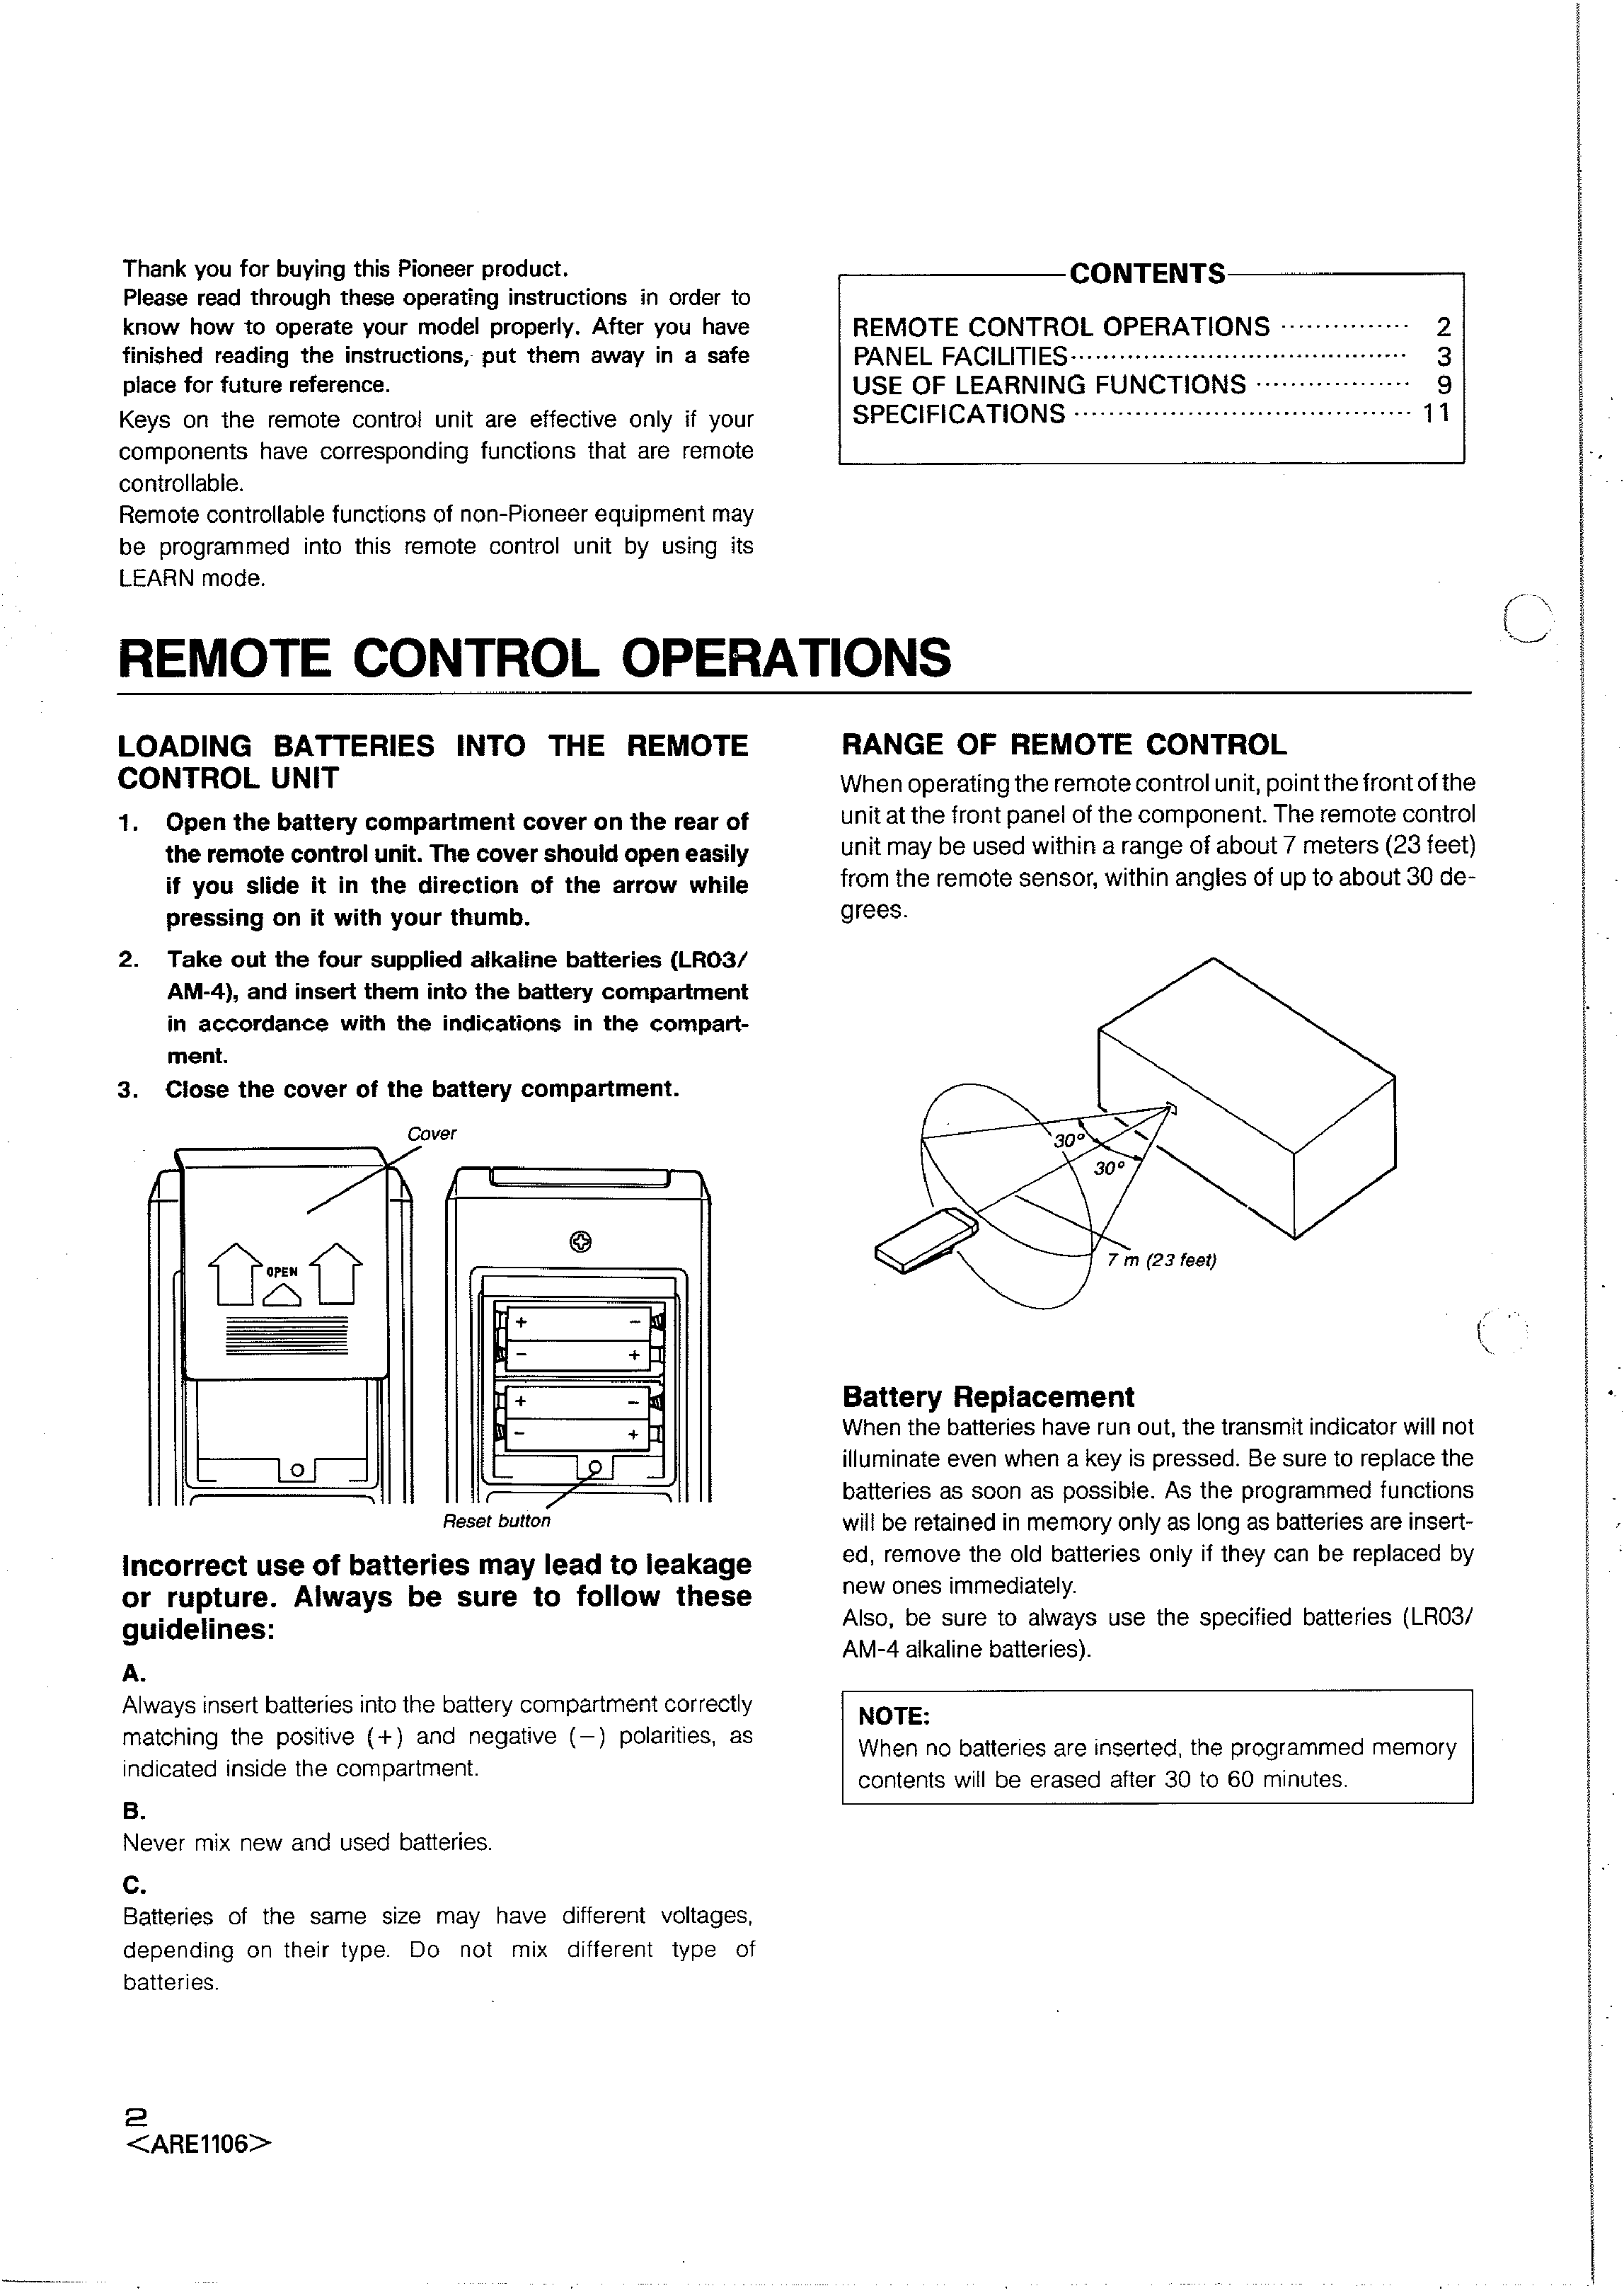 Owner's Manual for PIONEER CU-AV100a - Download